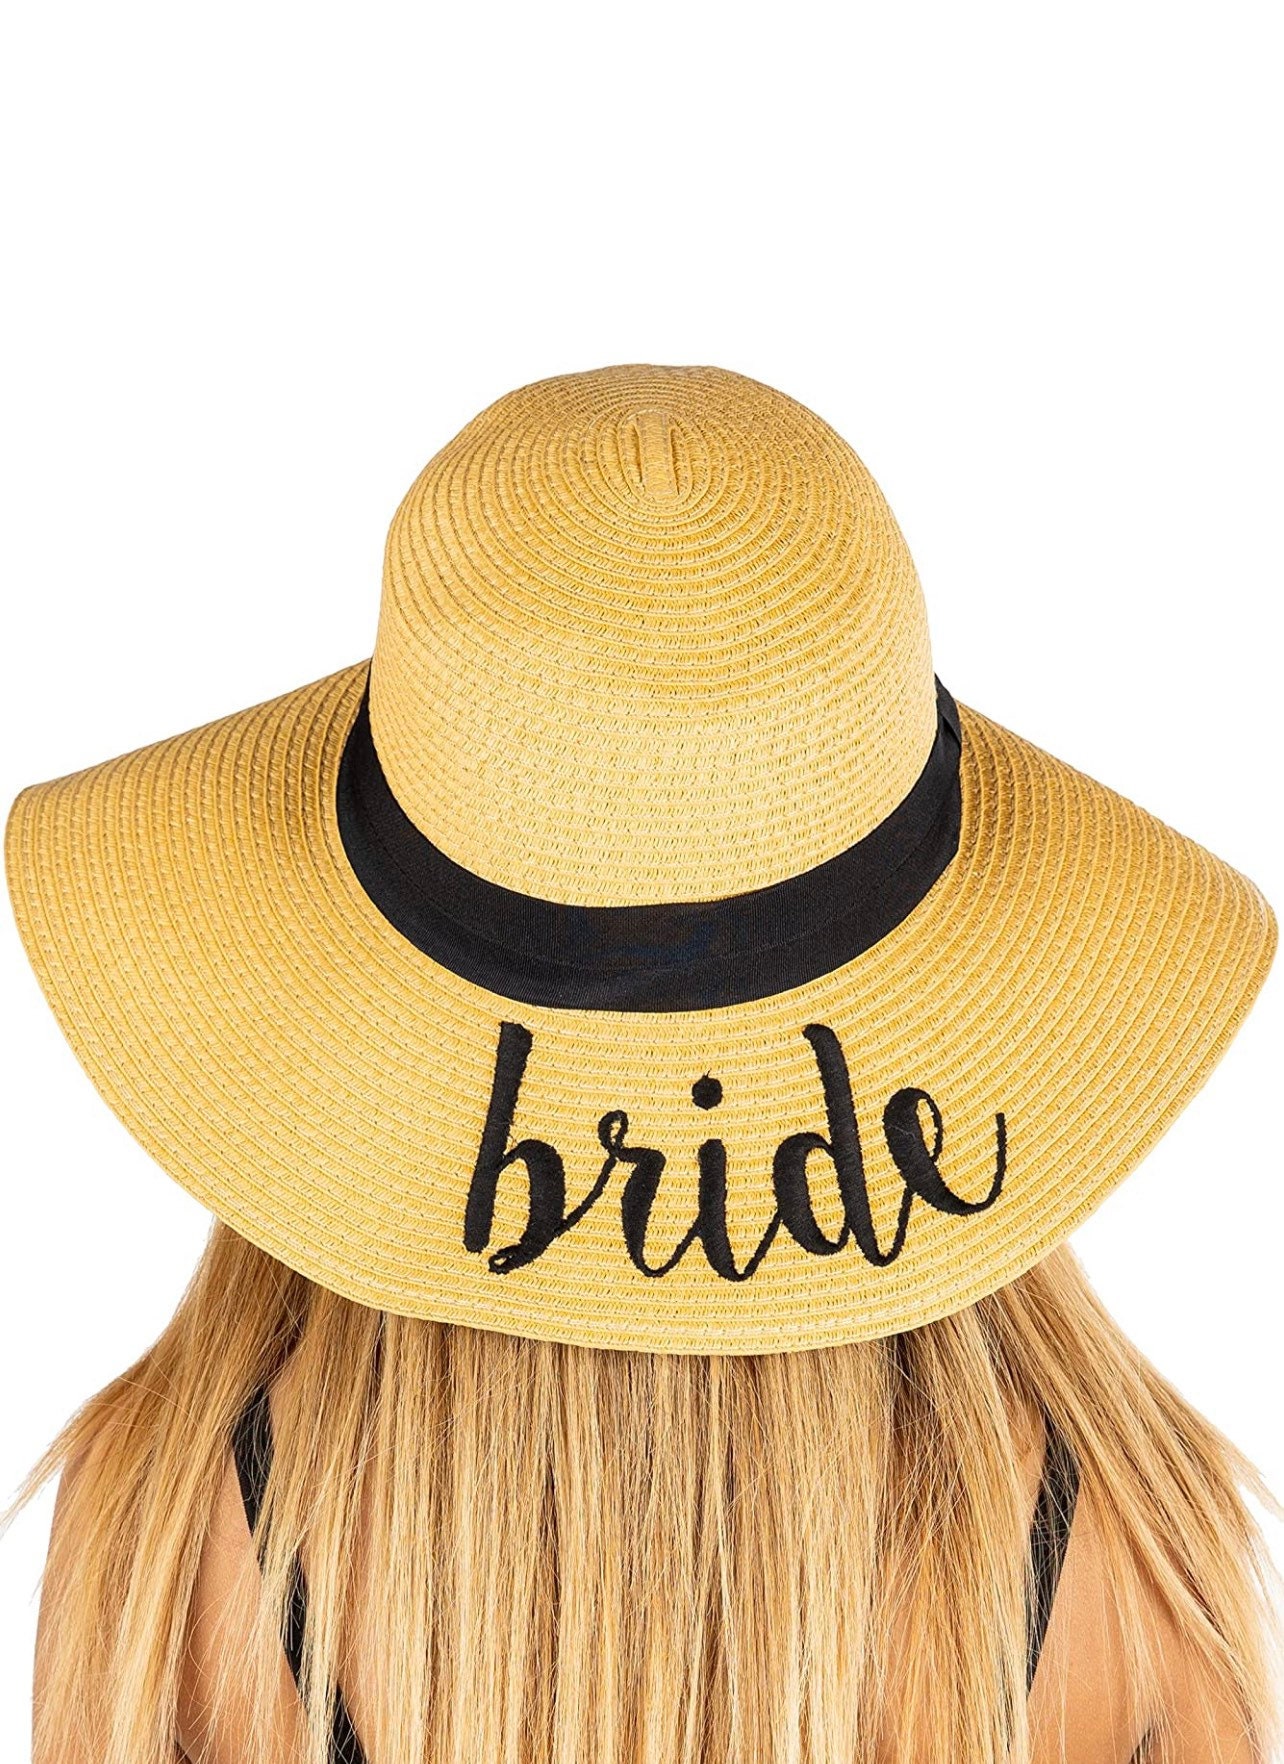 Embroidered Adjustable Beach Floppy Sun Hat | Etsy